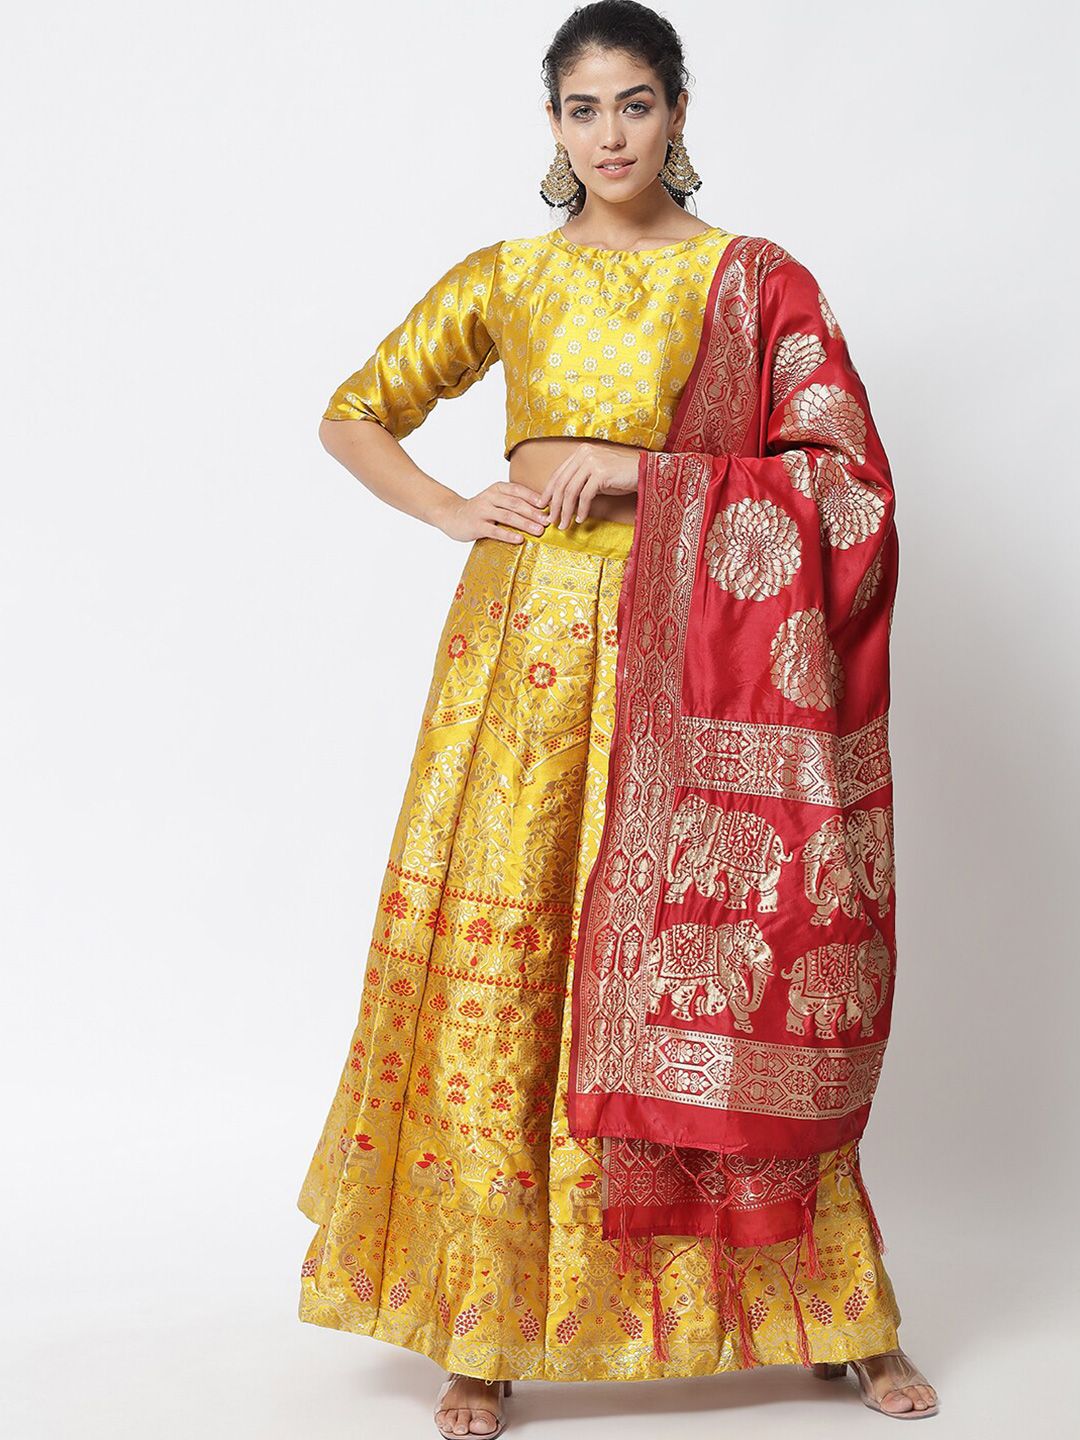 DIVASTRI Women Yellow & Red Woven Design Semi-Stitched Lehenga Choli With Dupatta Price in India